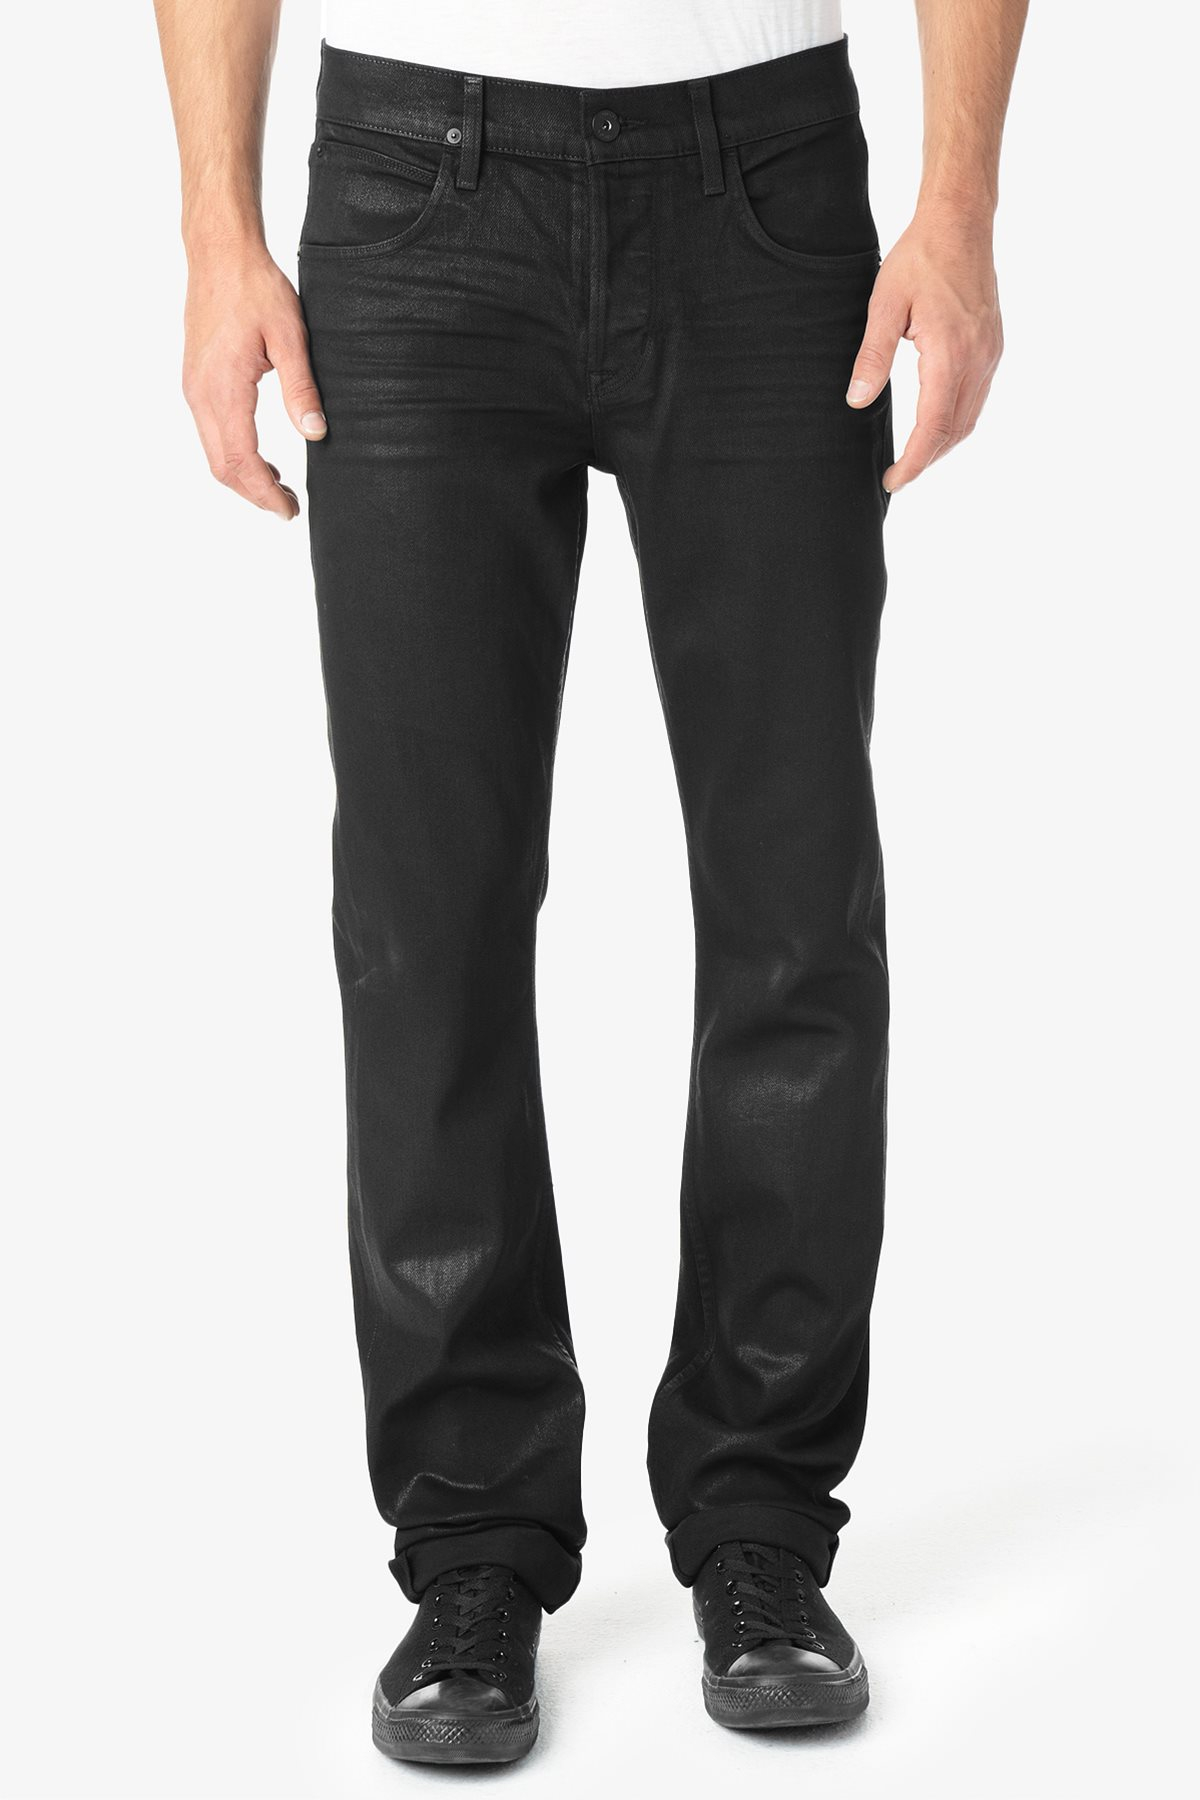 Lyst - Hudson Jeans Byron Straight Jeans in Black for Men